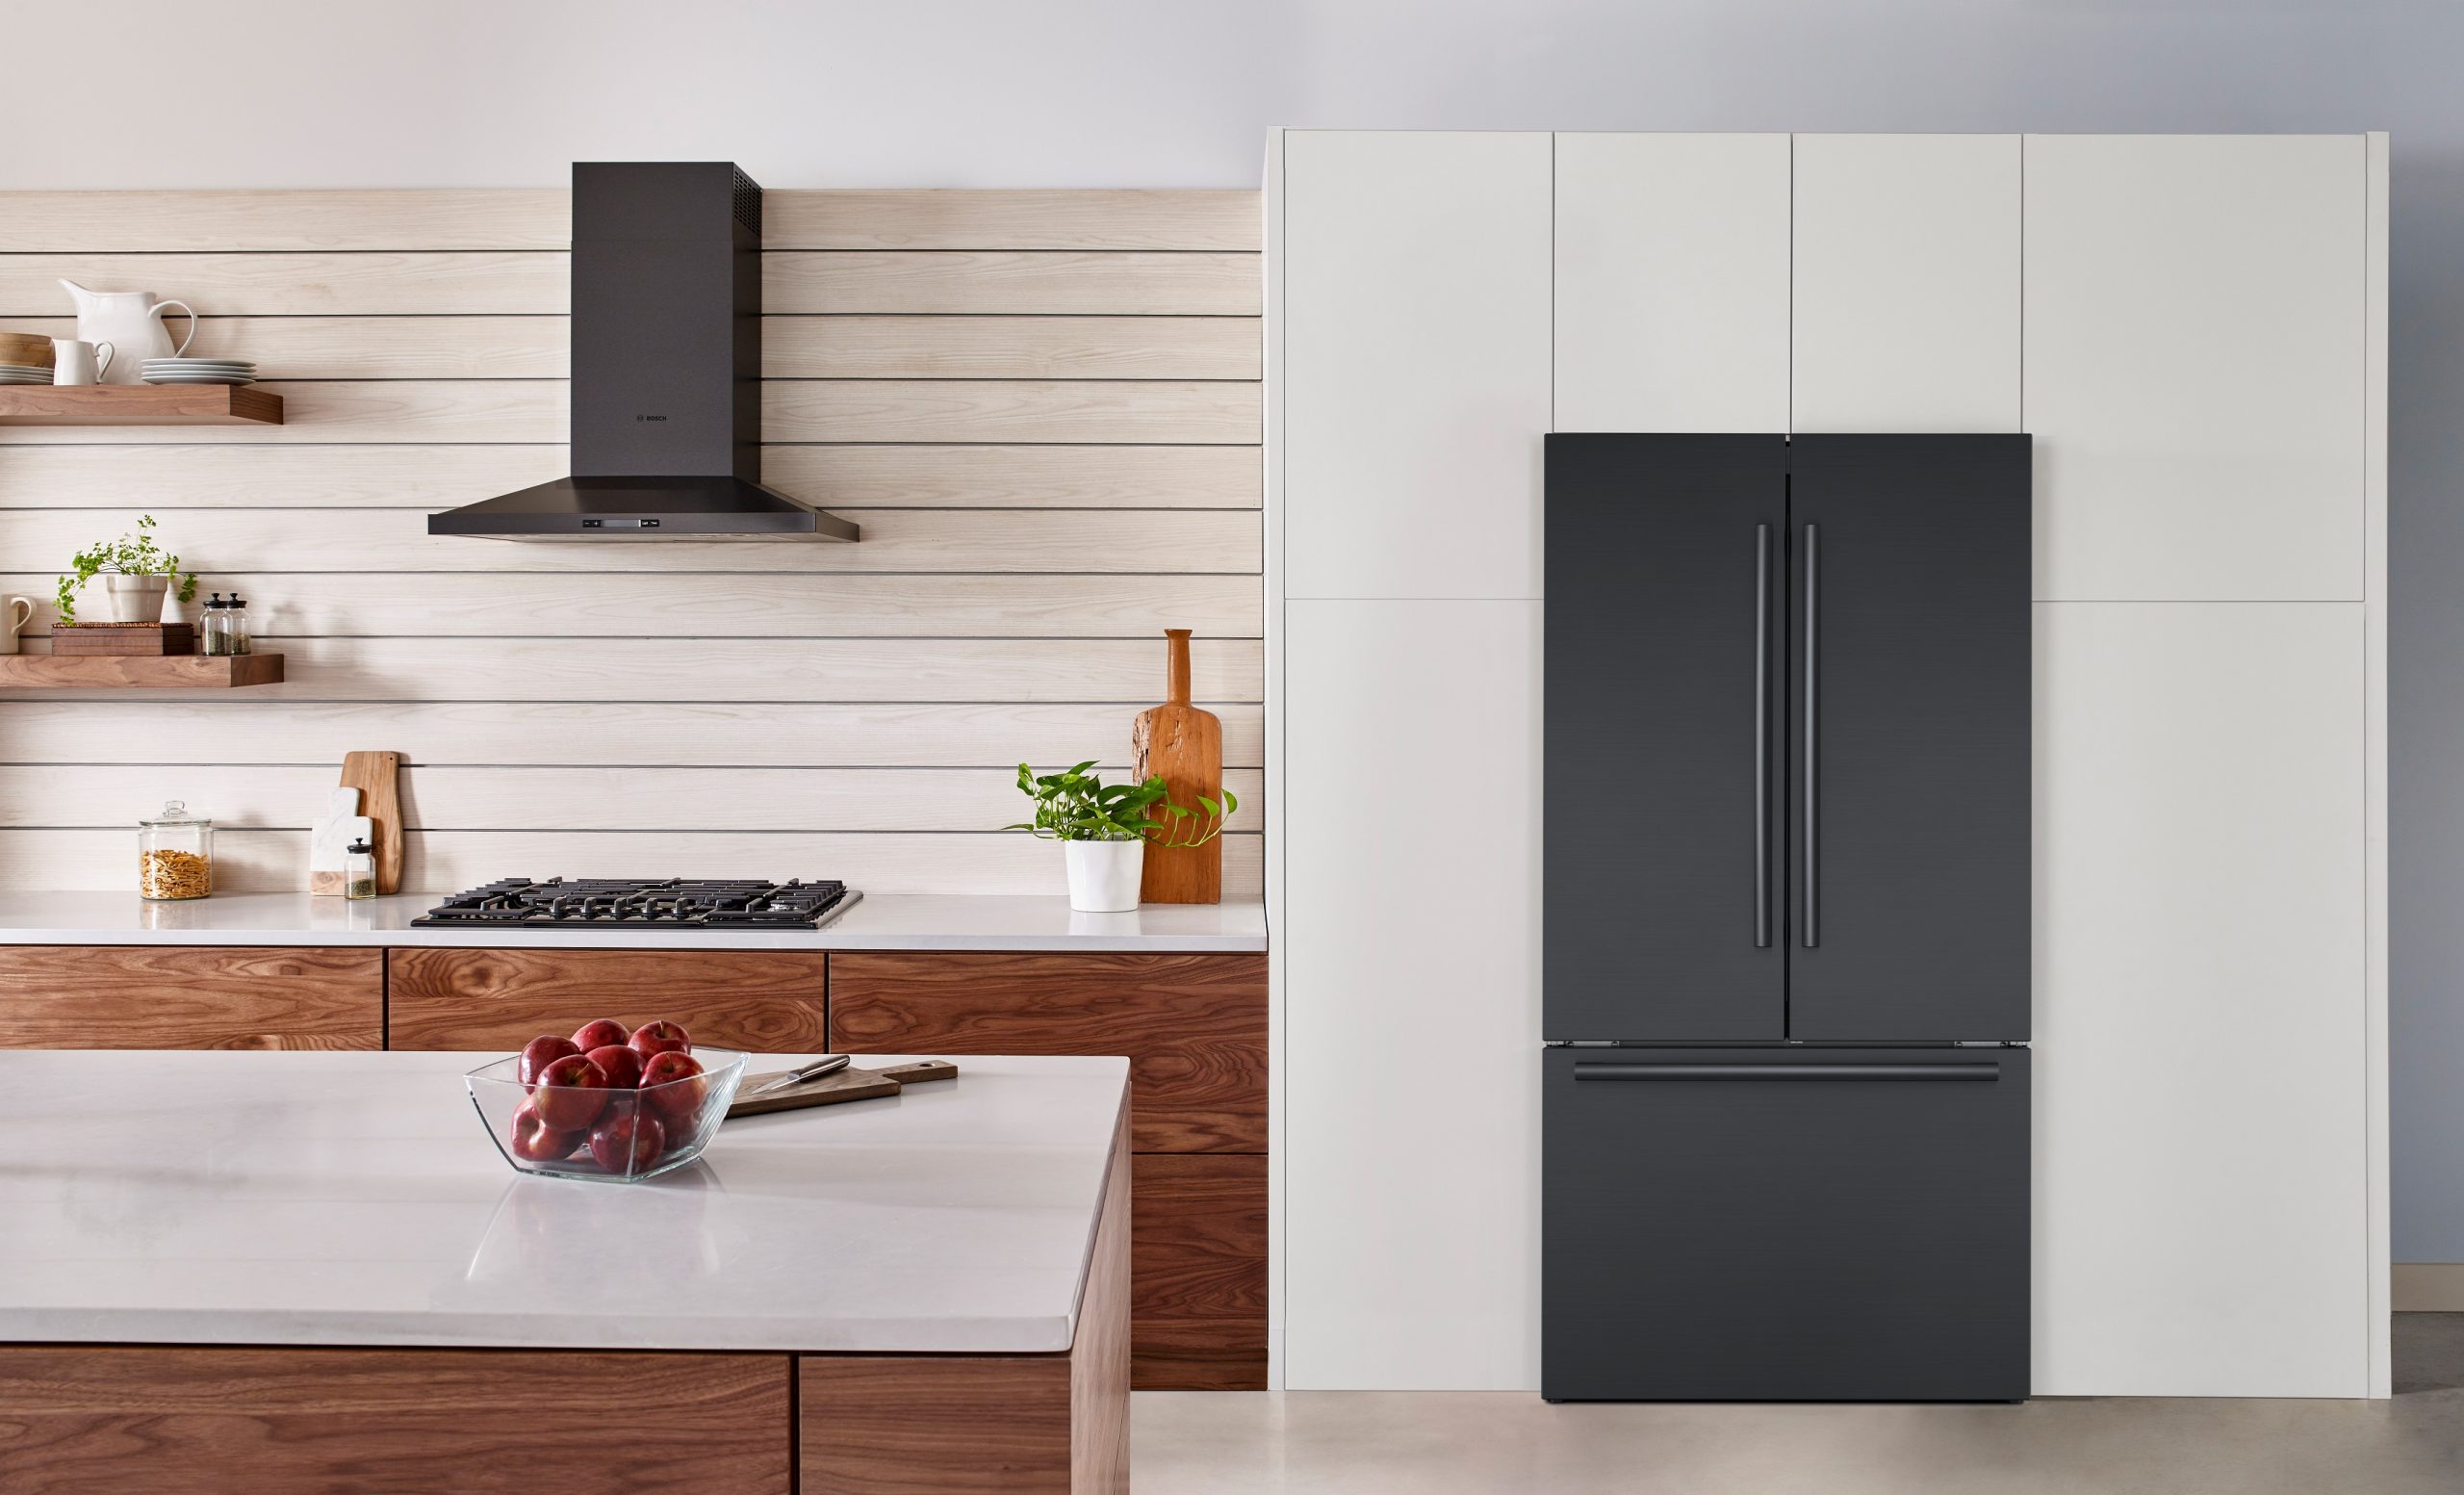 Bosch Counter-Depth Refrigerator at Best Buy